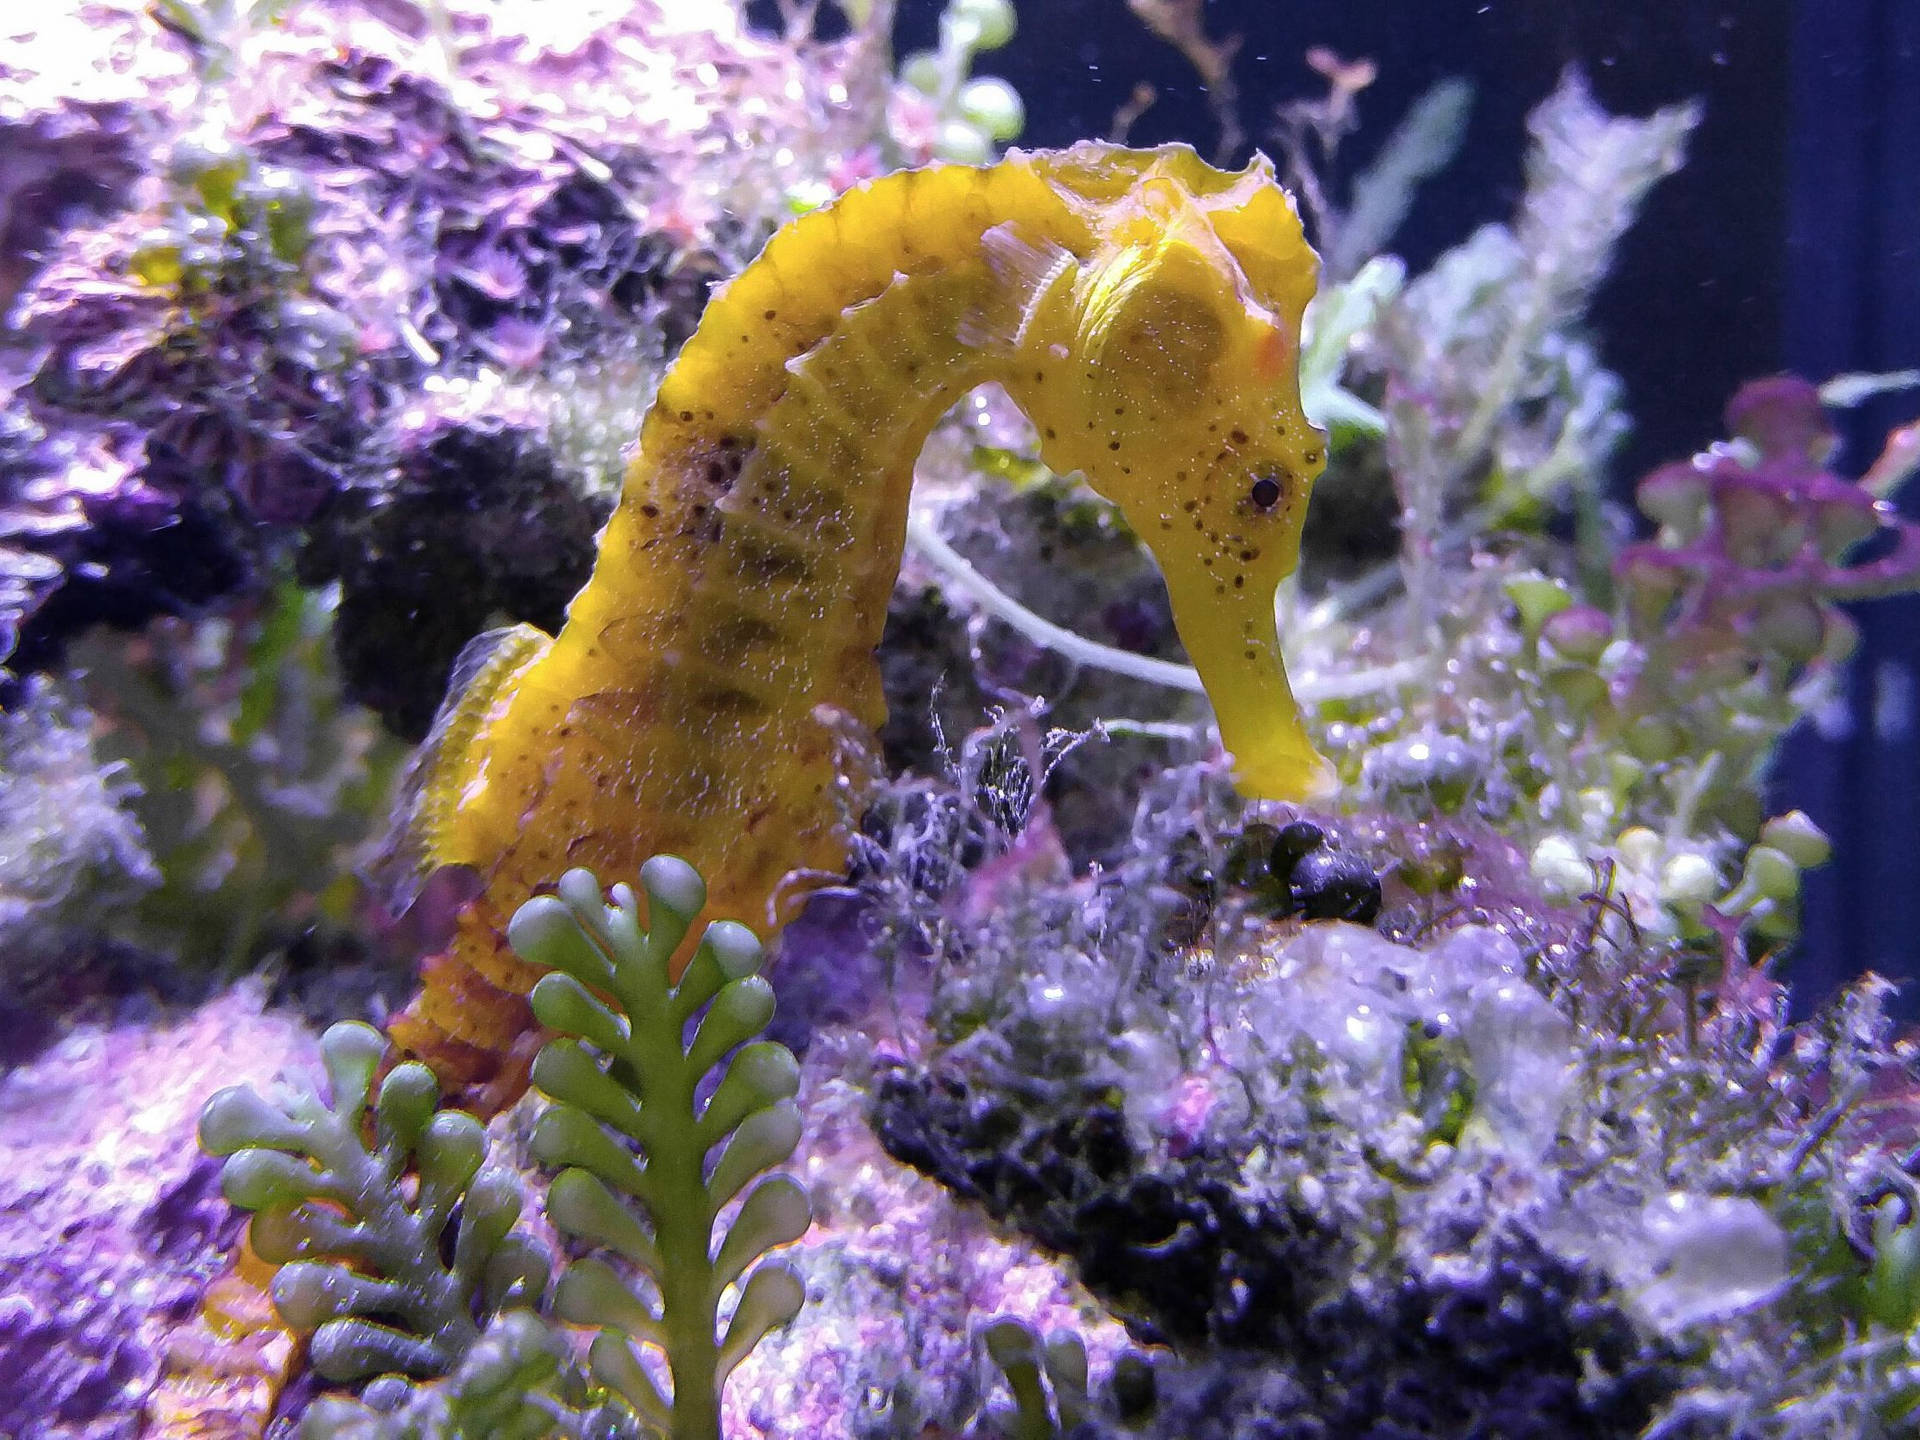 Cute Yellow Seahorse